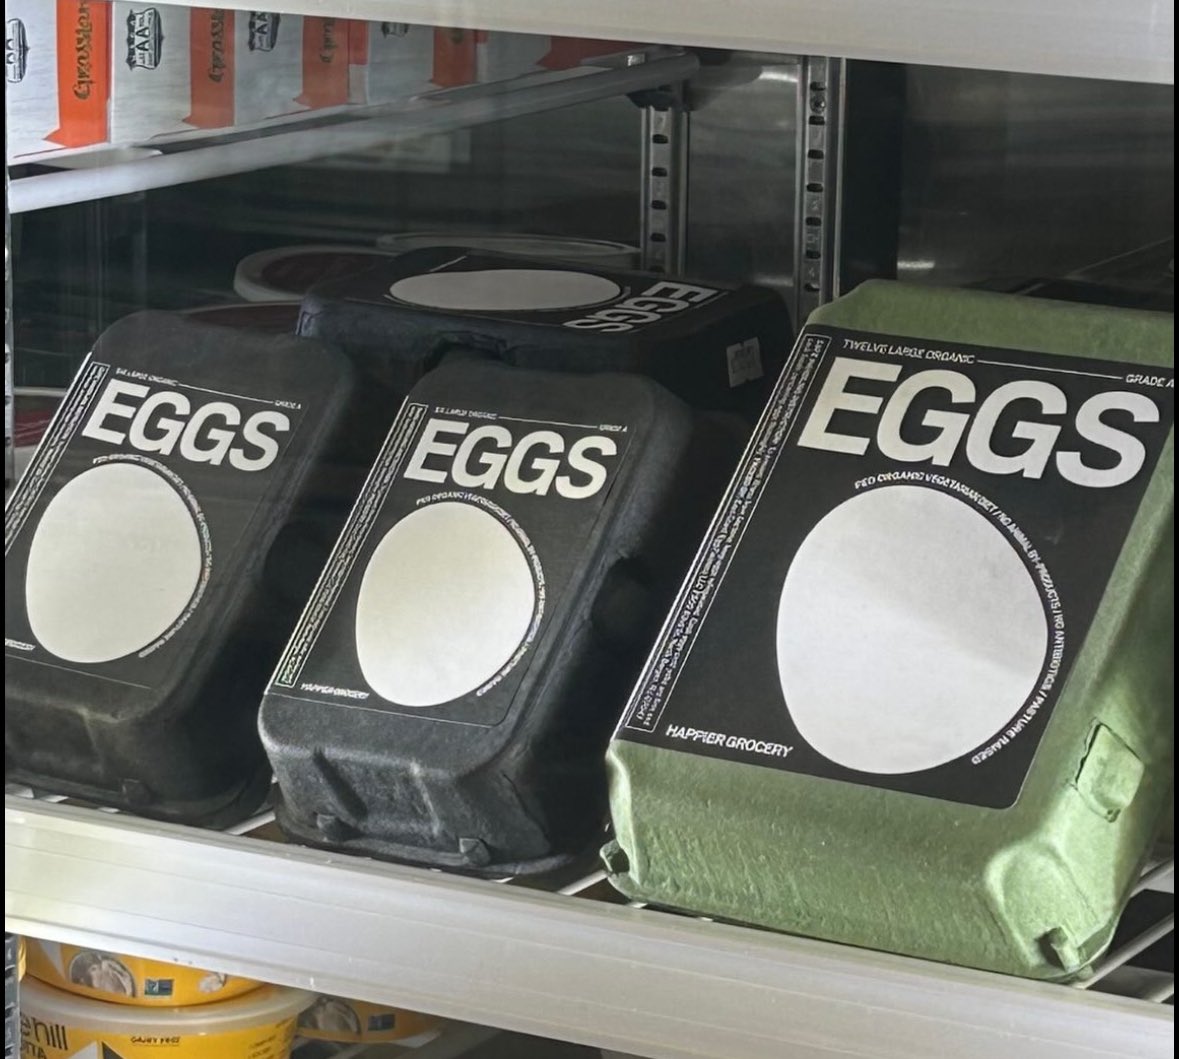 hypebeast eggs 😭😂